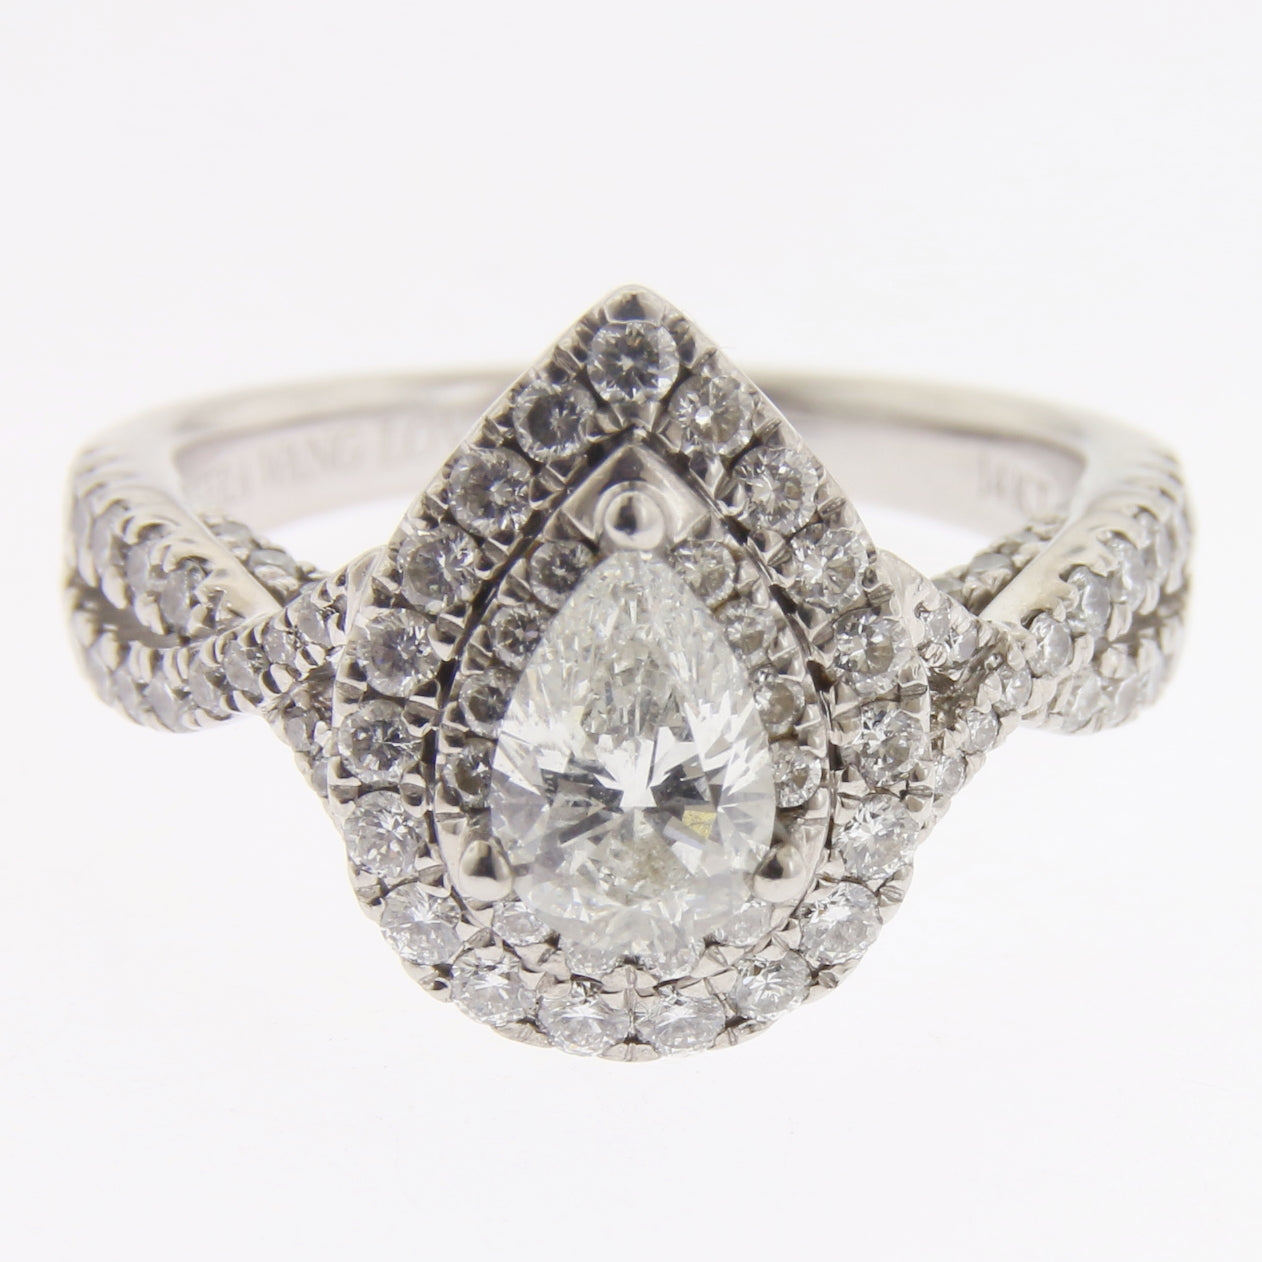 Pear shaped Diamond Ring